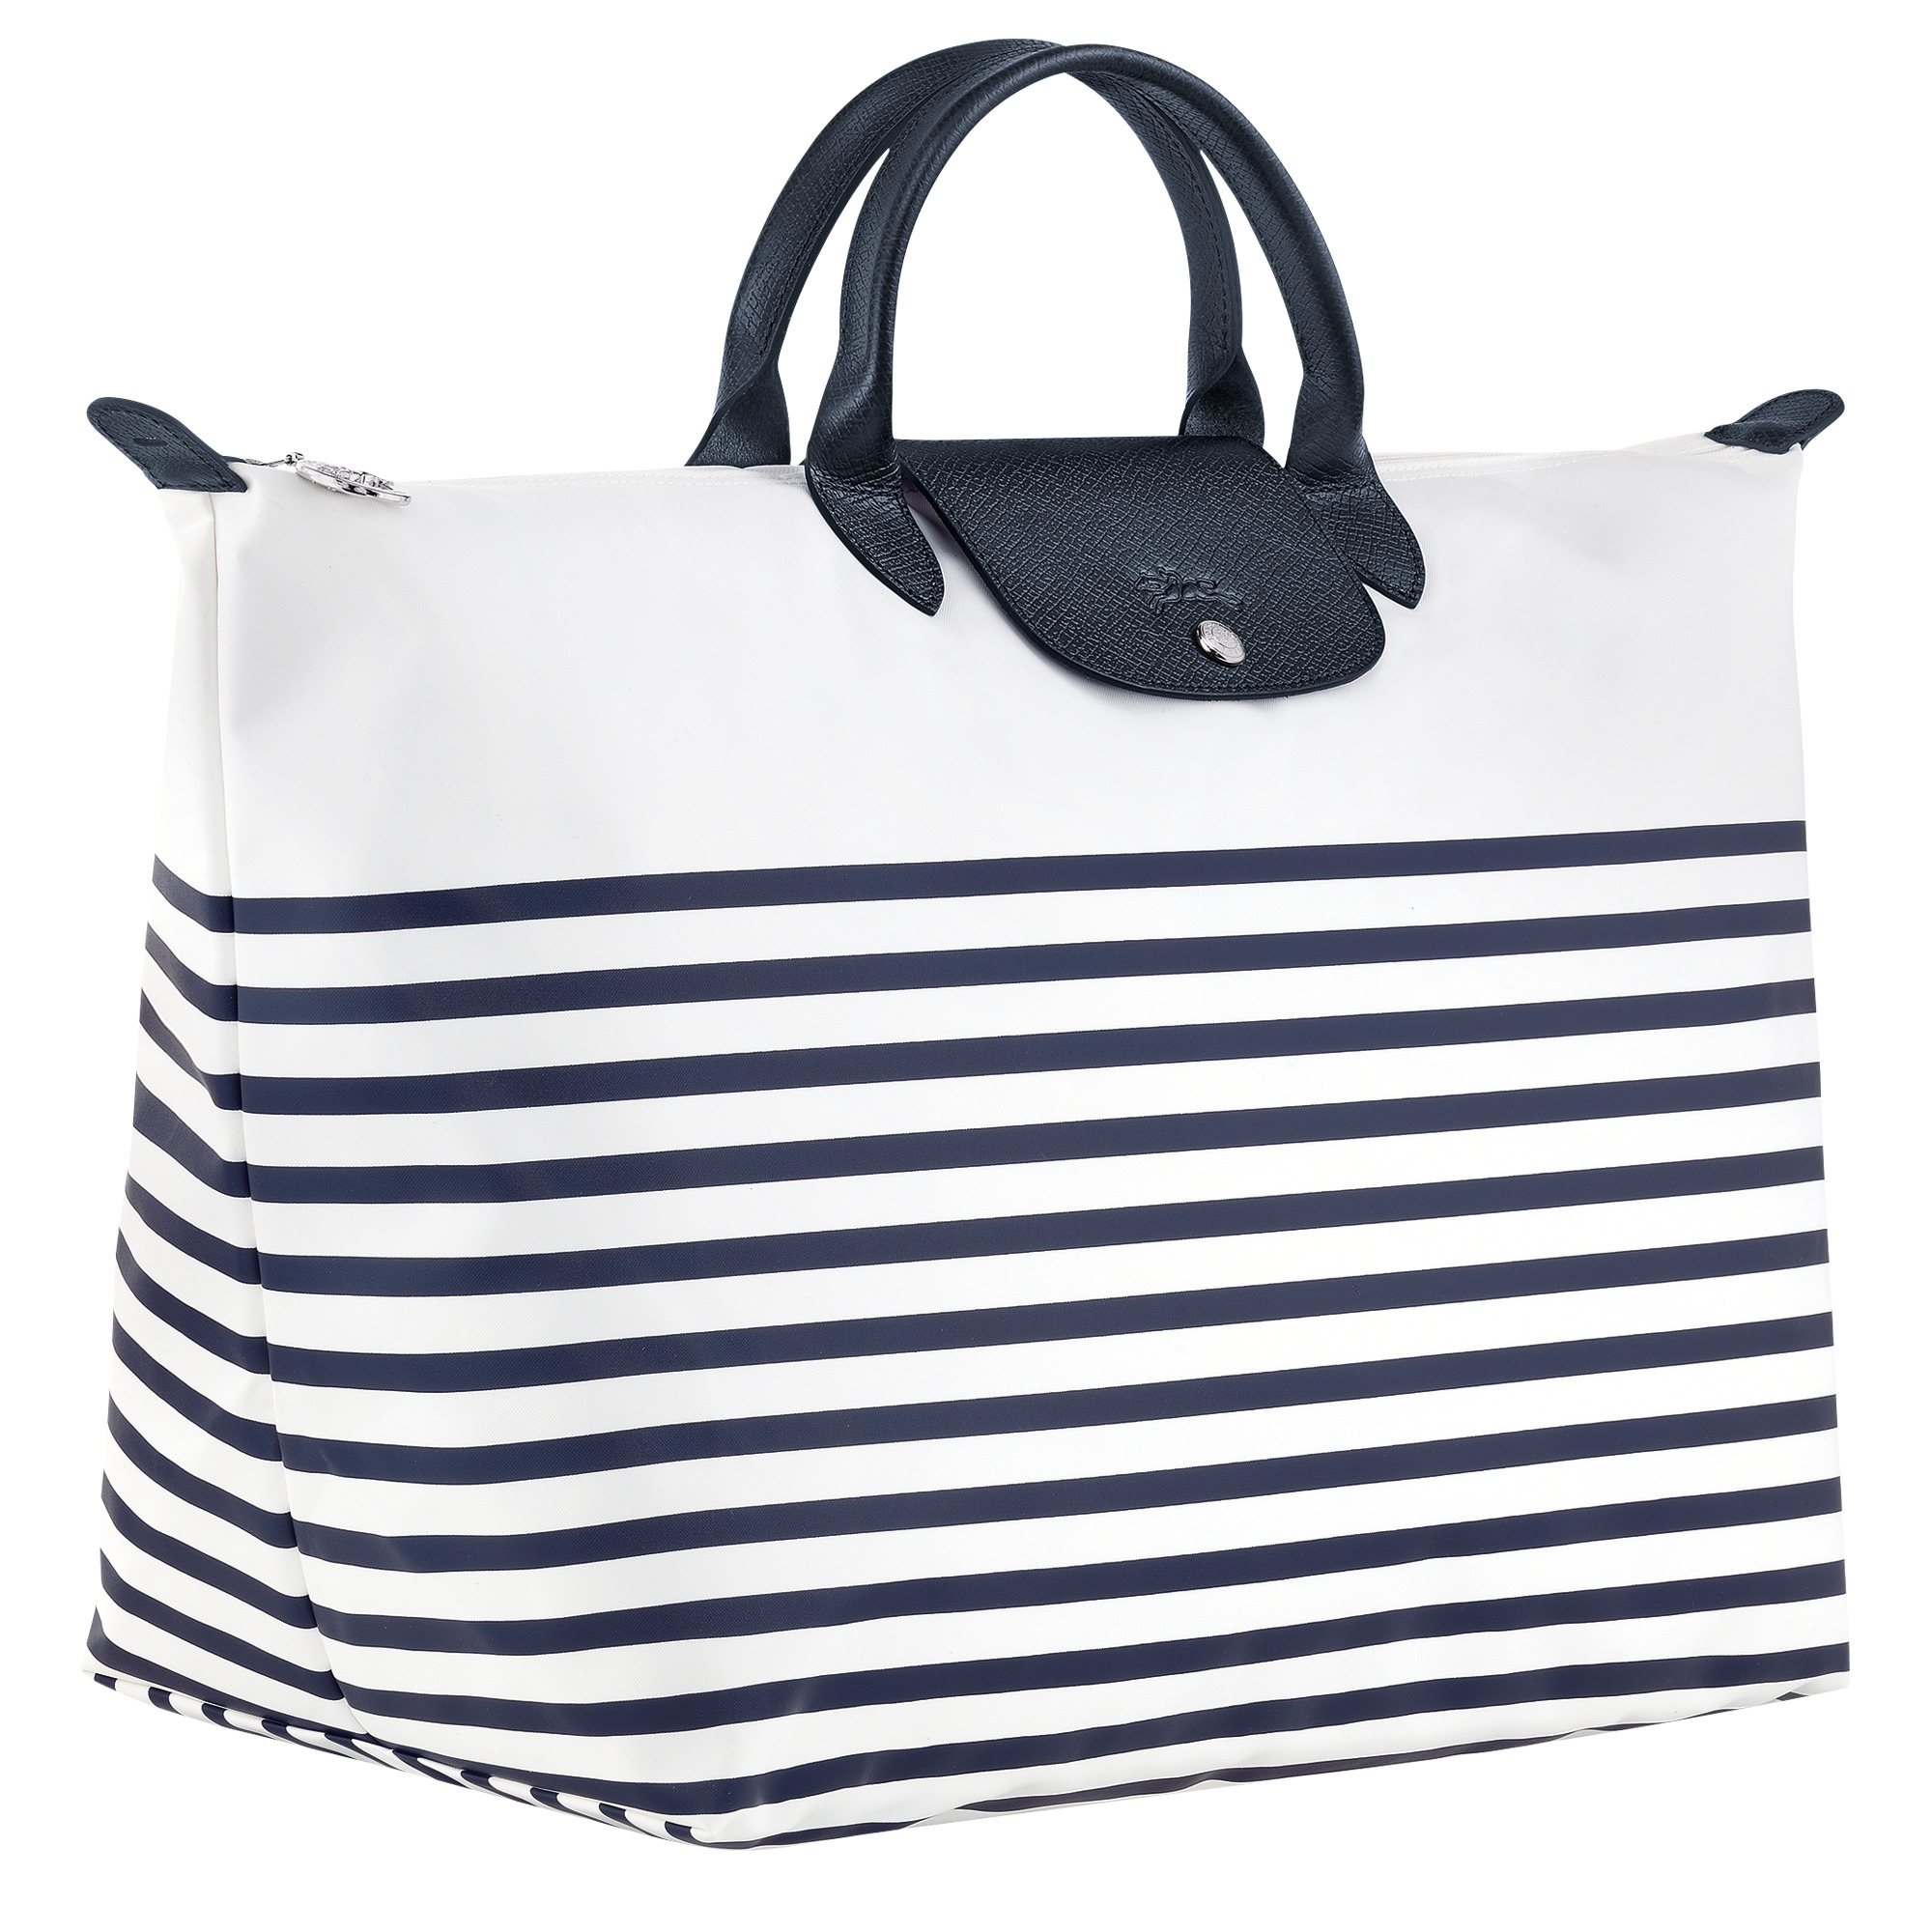 Longchamp Tote Striped Bags & Handbags for Women